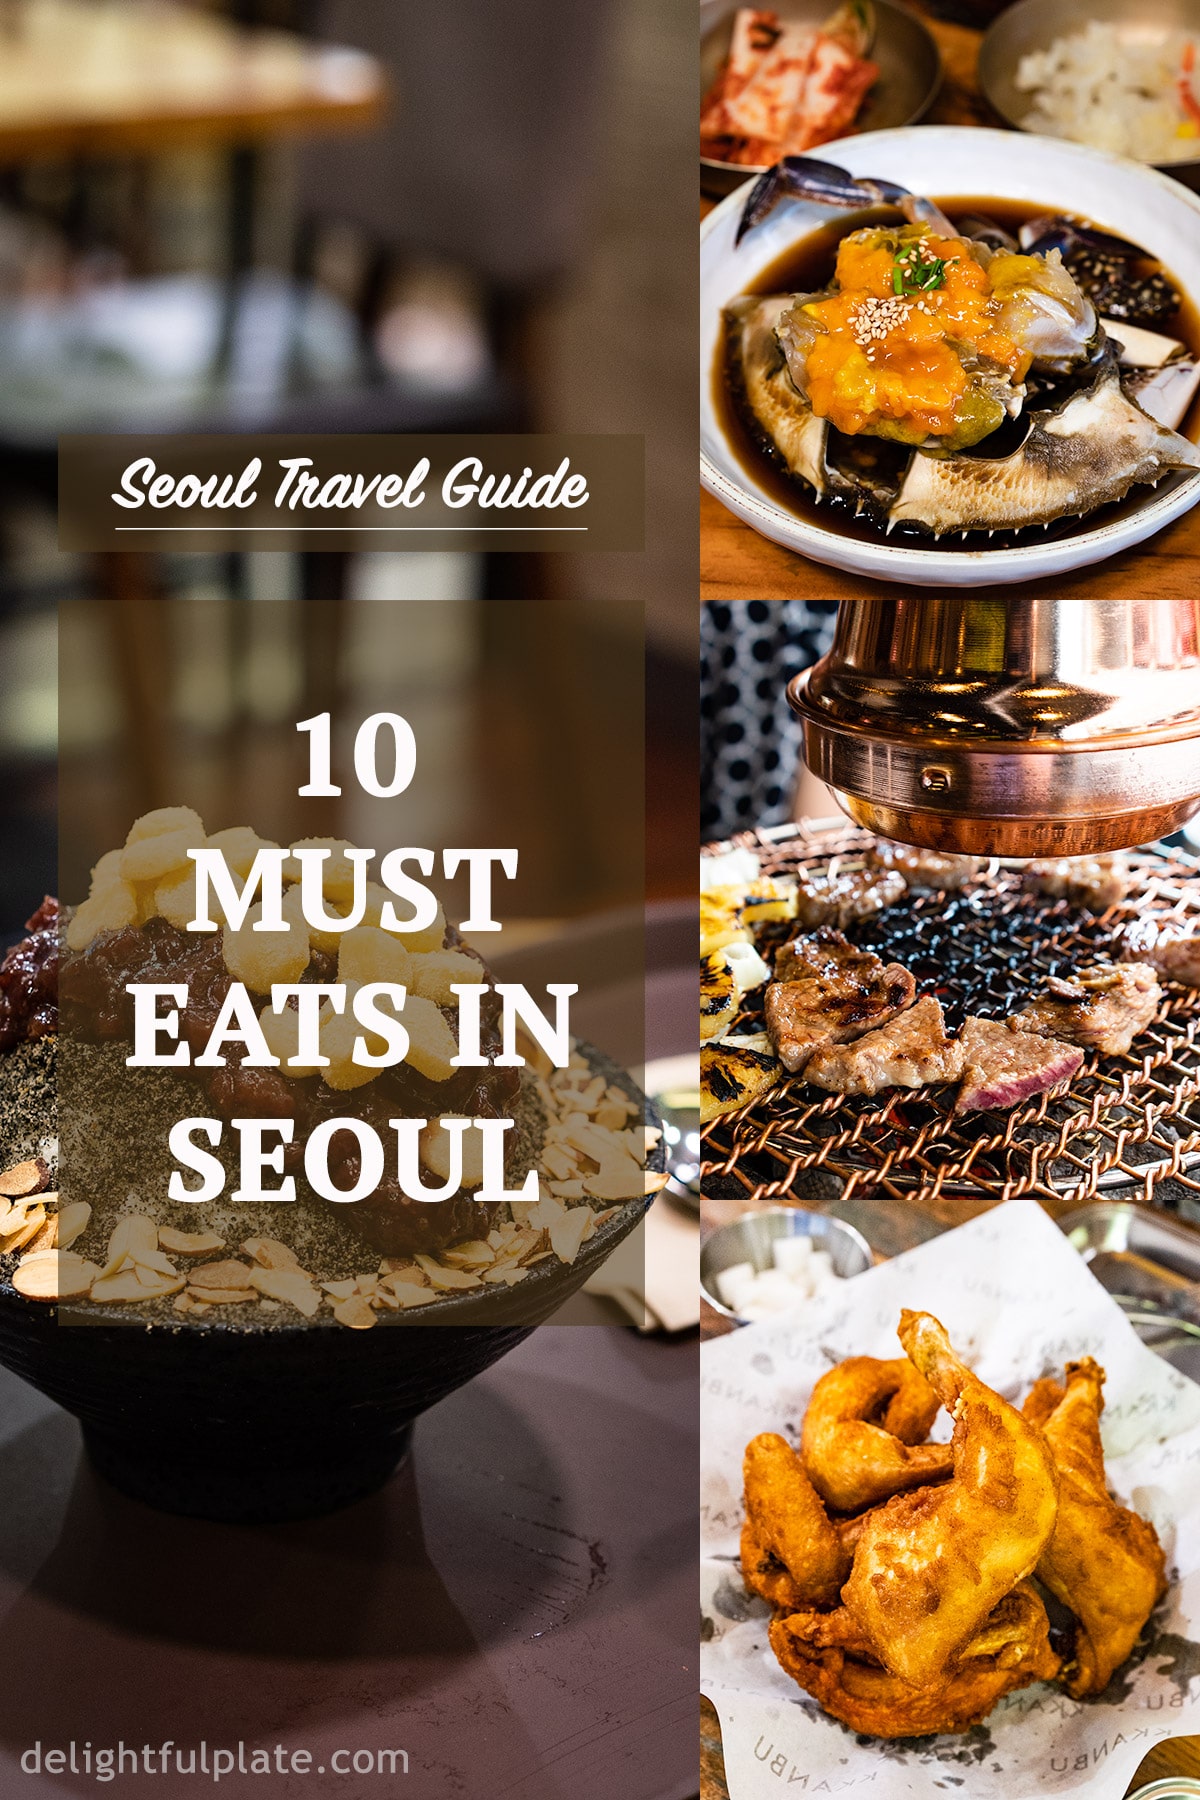 Seoul Food Travel Guide 10 Must Eats in Seoul Delightful Plate